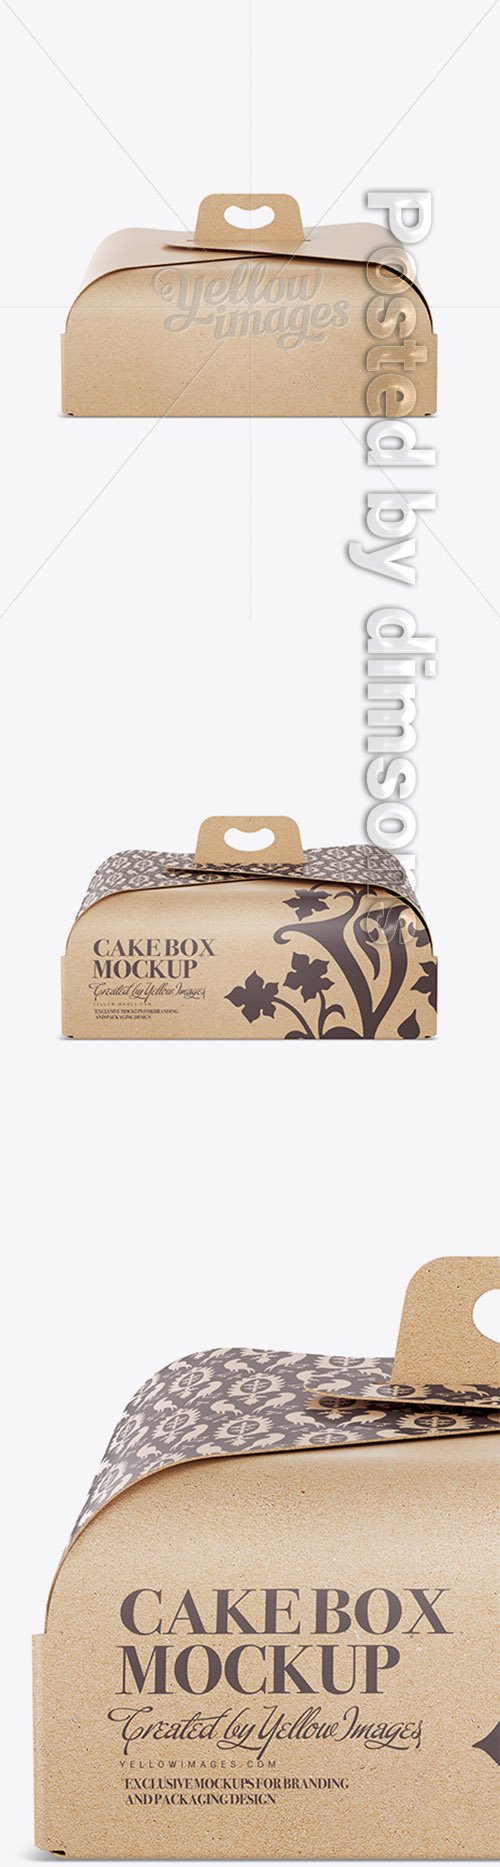 Carton Cake Box Mockup - Front View 14773 TIF